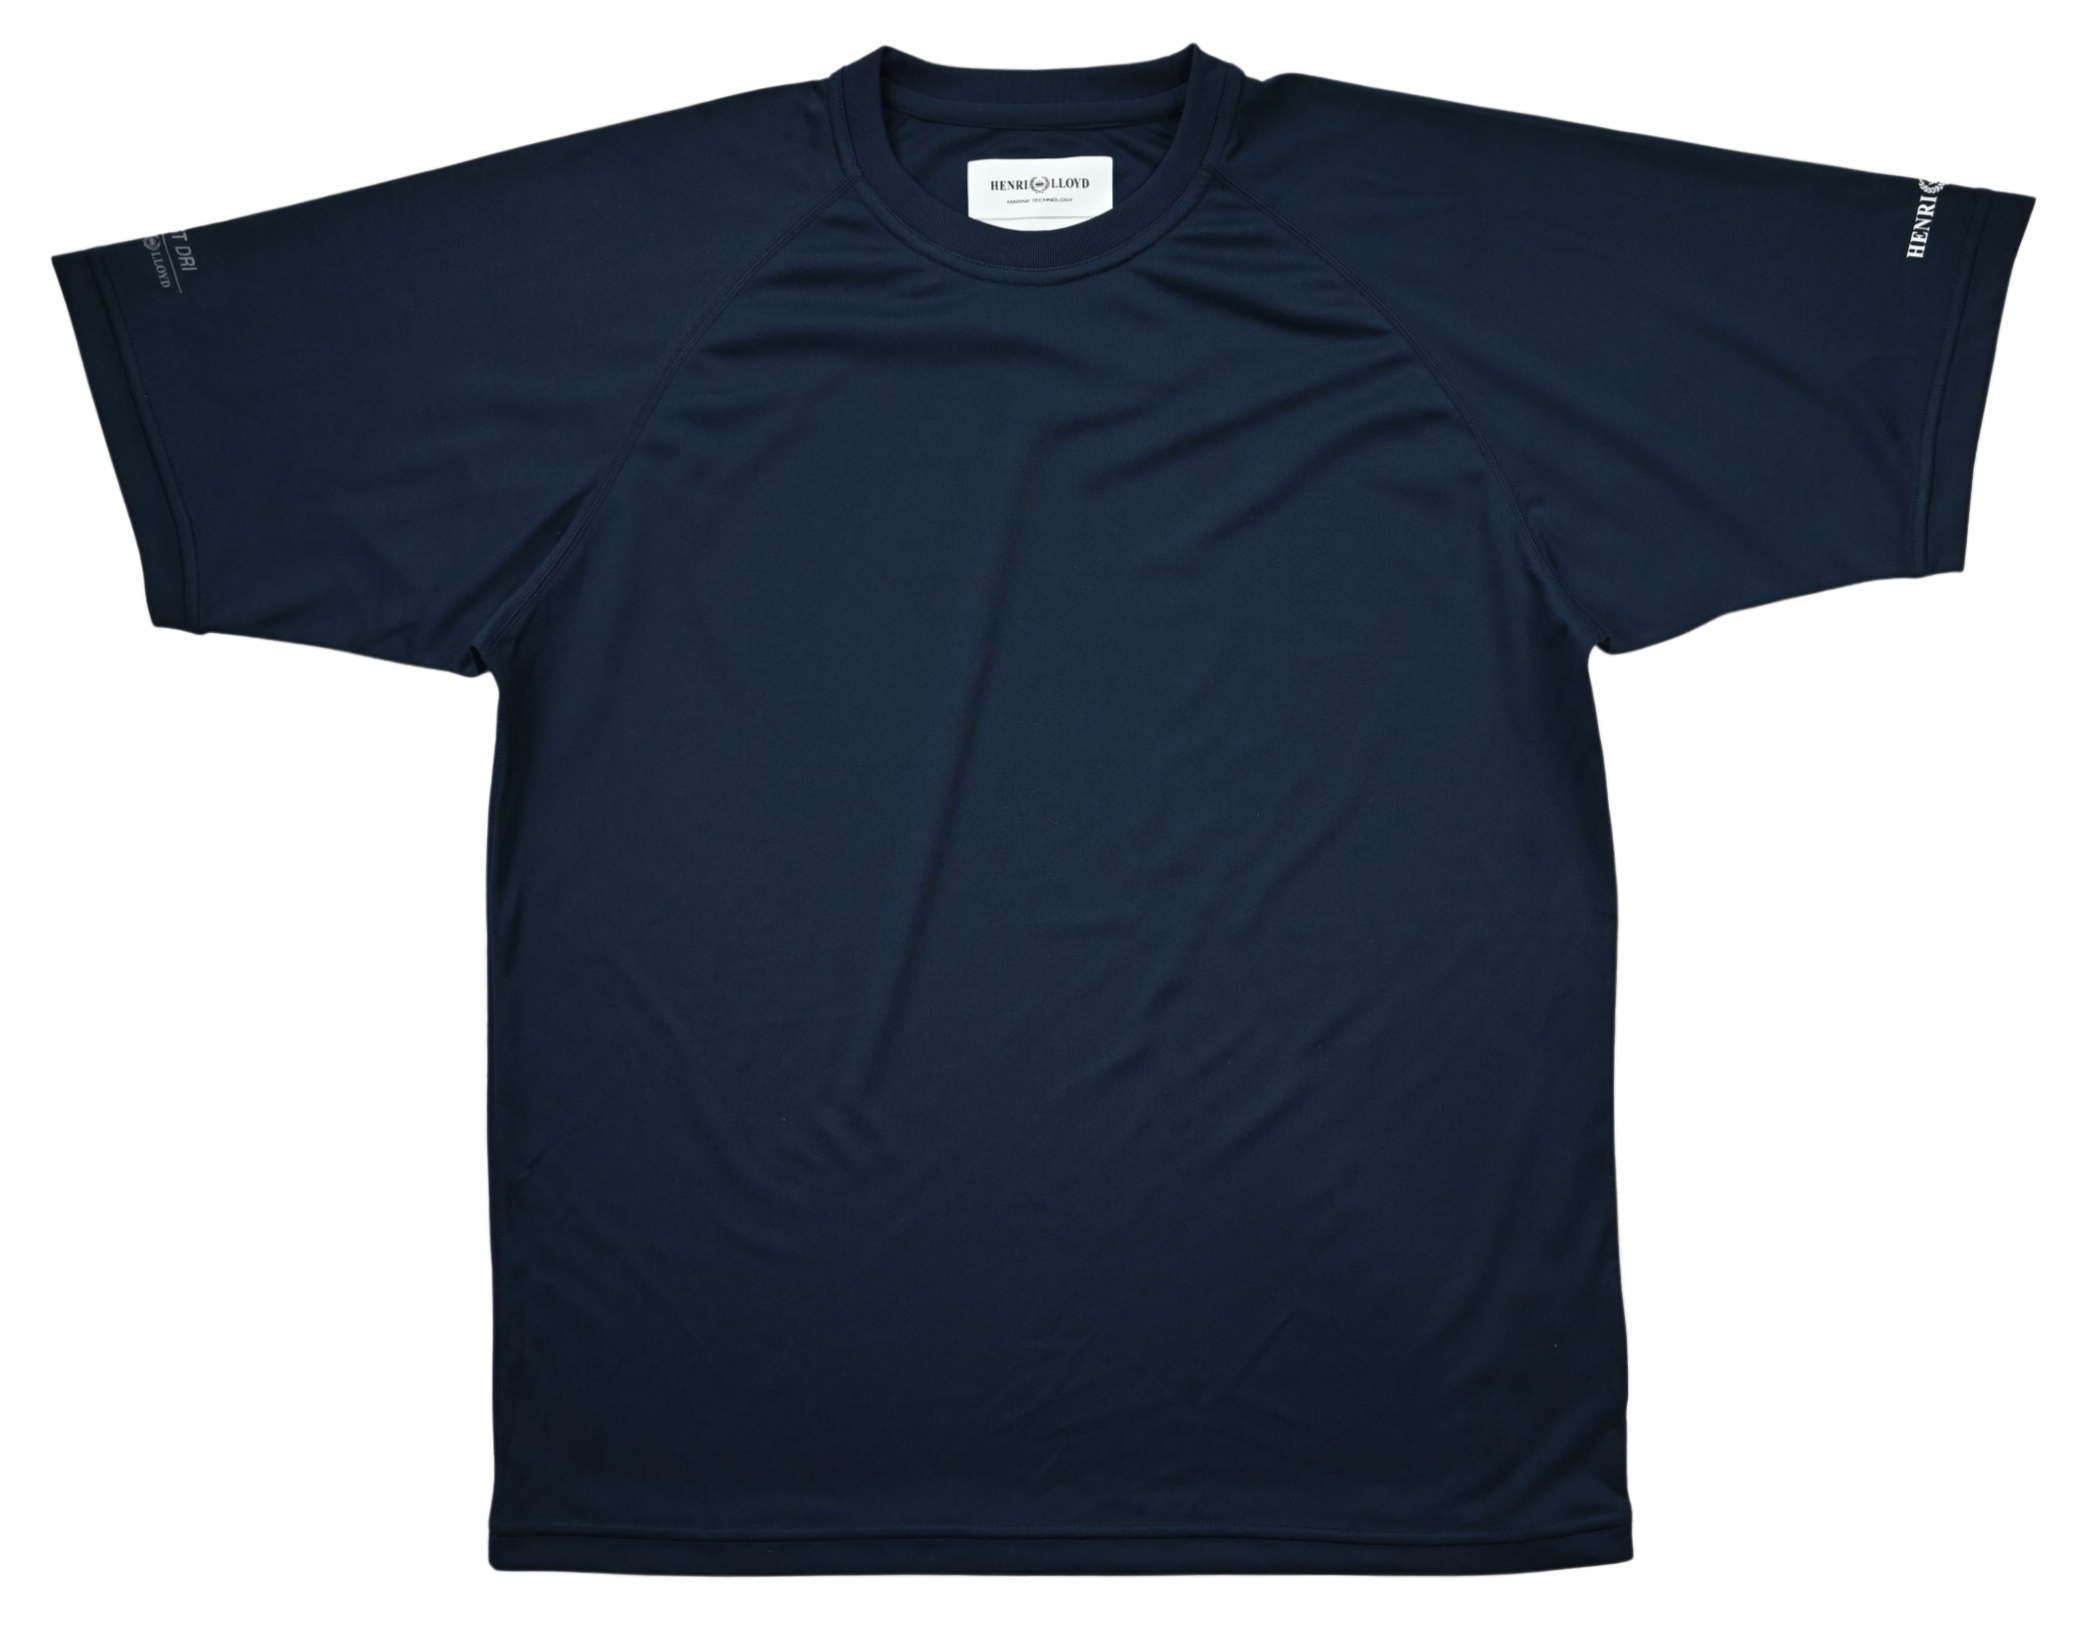 HENRI LLOYD SAILING SHIRT M Other Shirts \ Vintage